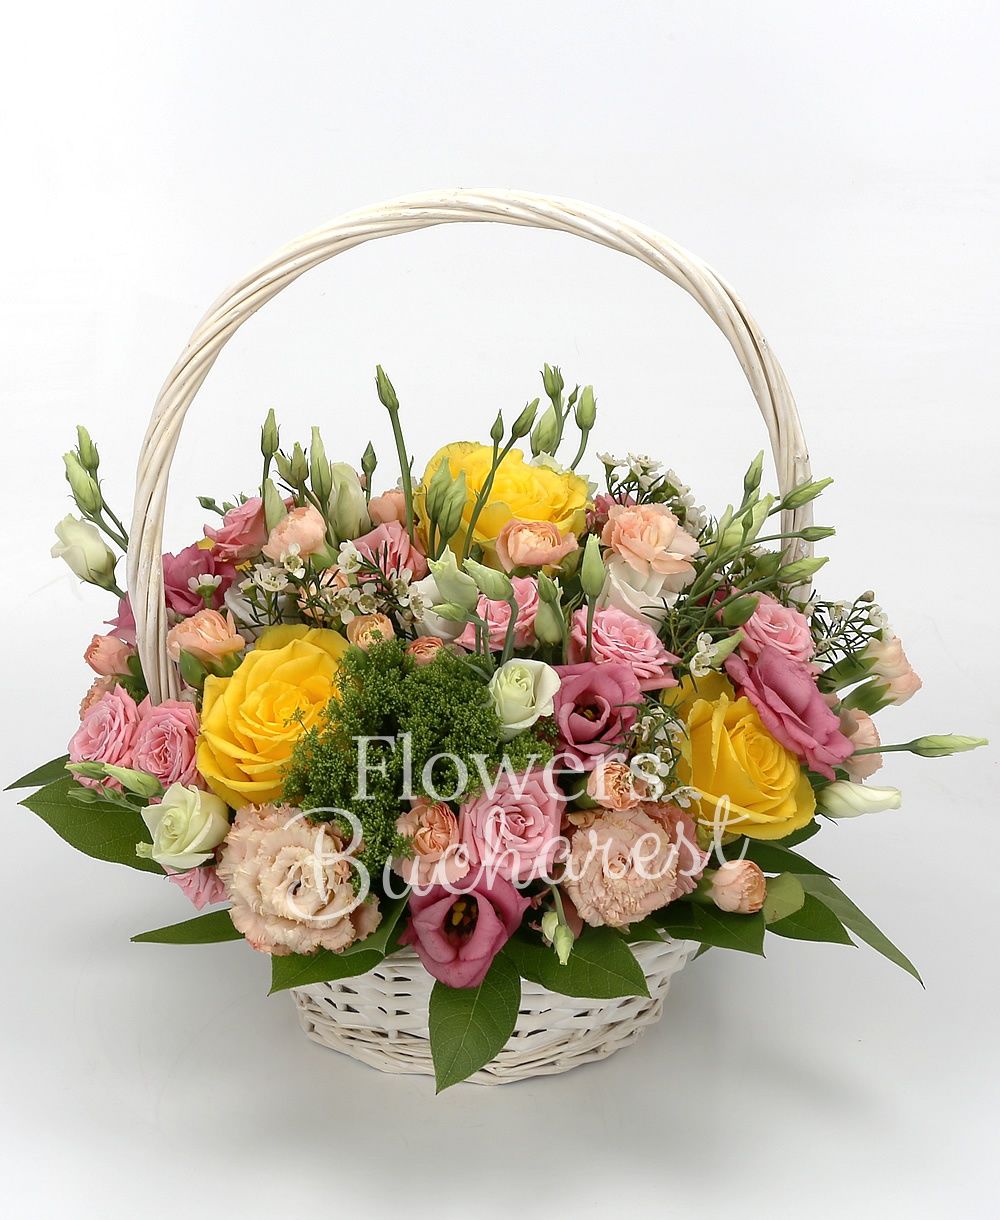 5 yellow roses, 5 pink lisianthus, 5 pink miniroses, 3 white lisianthus, 3 white waxflower, 3 white trachelium,5 pink minicarnations, greenery